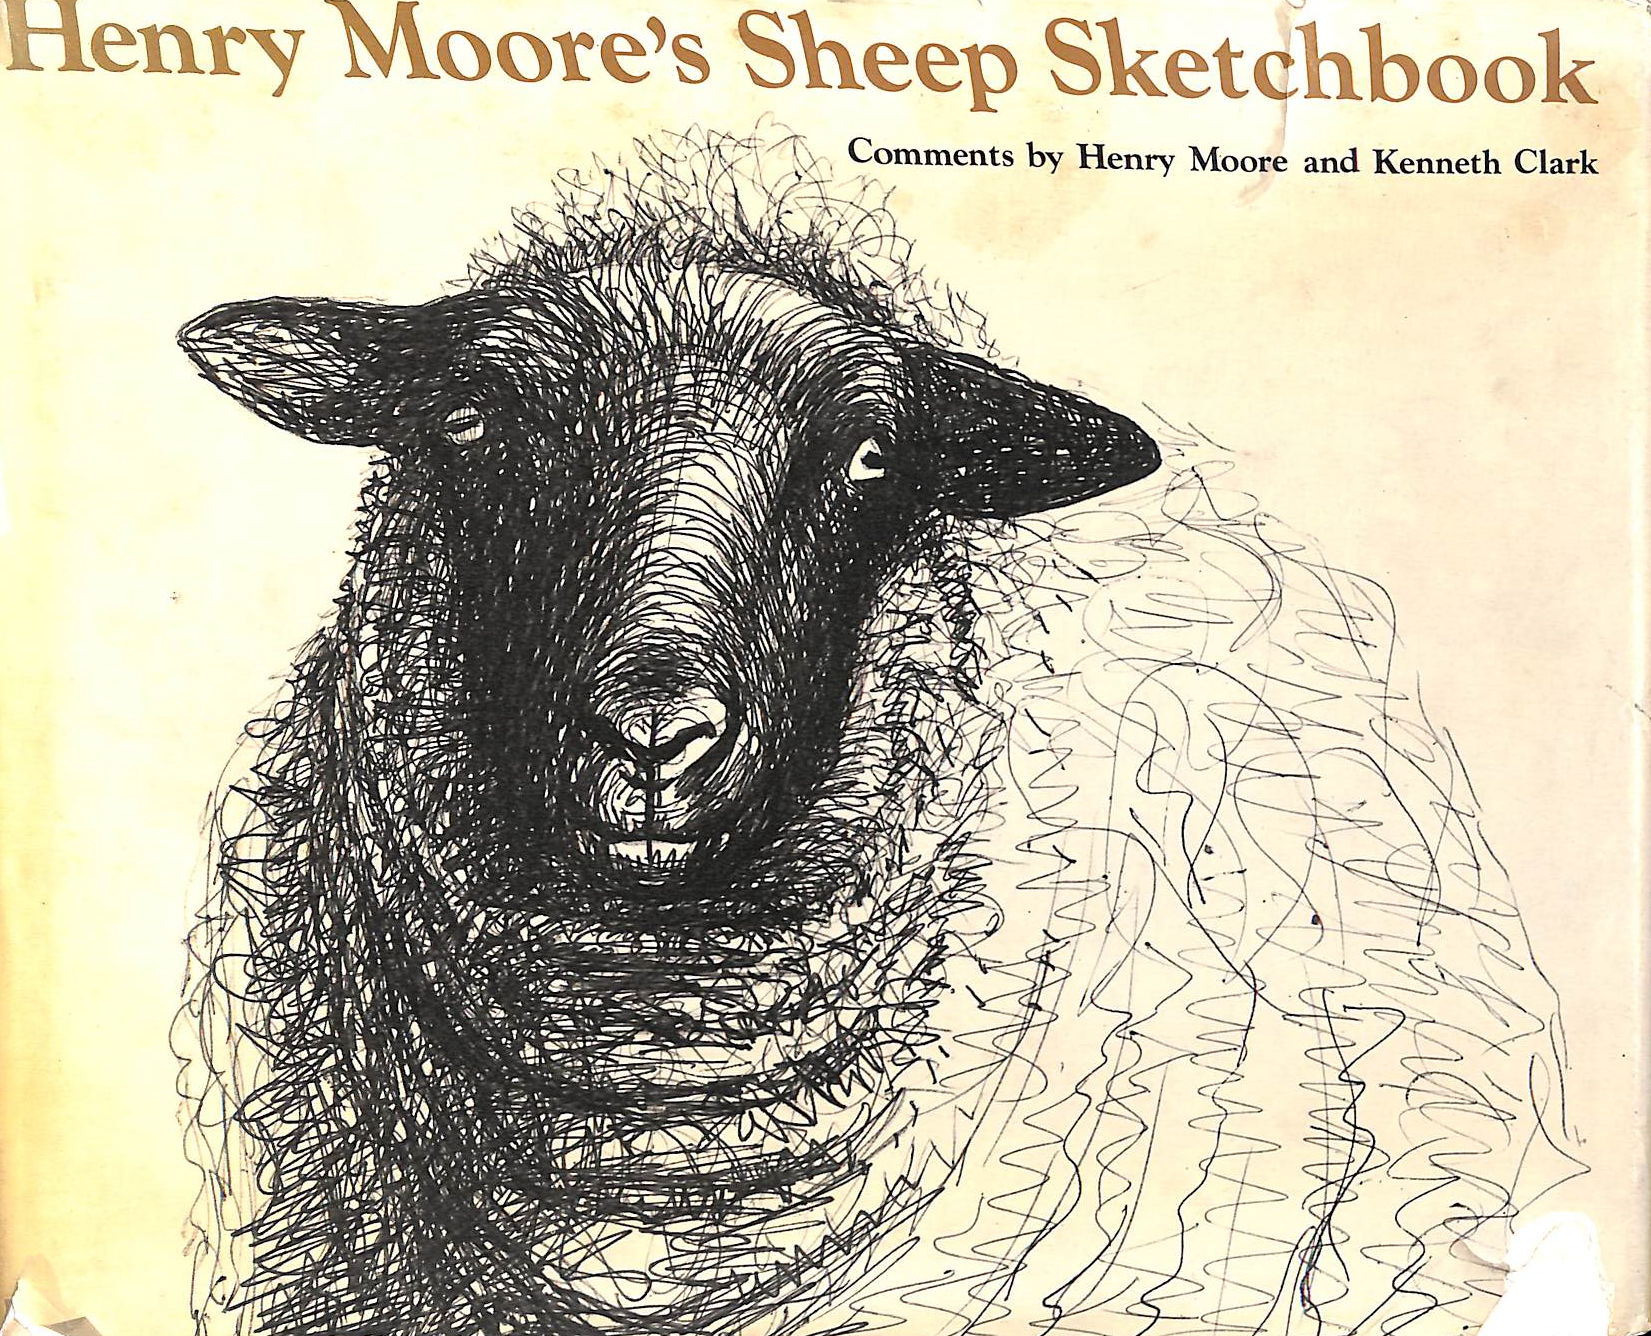 CLARK, KENNETH - Henry Moore's Sheep Sketchbook